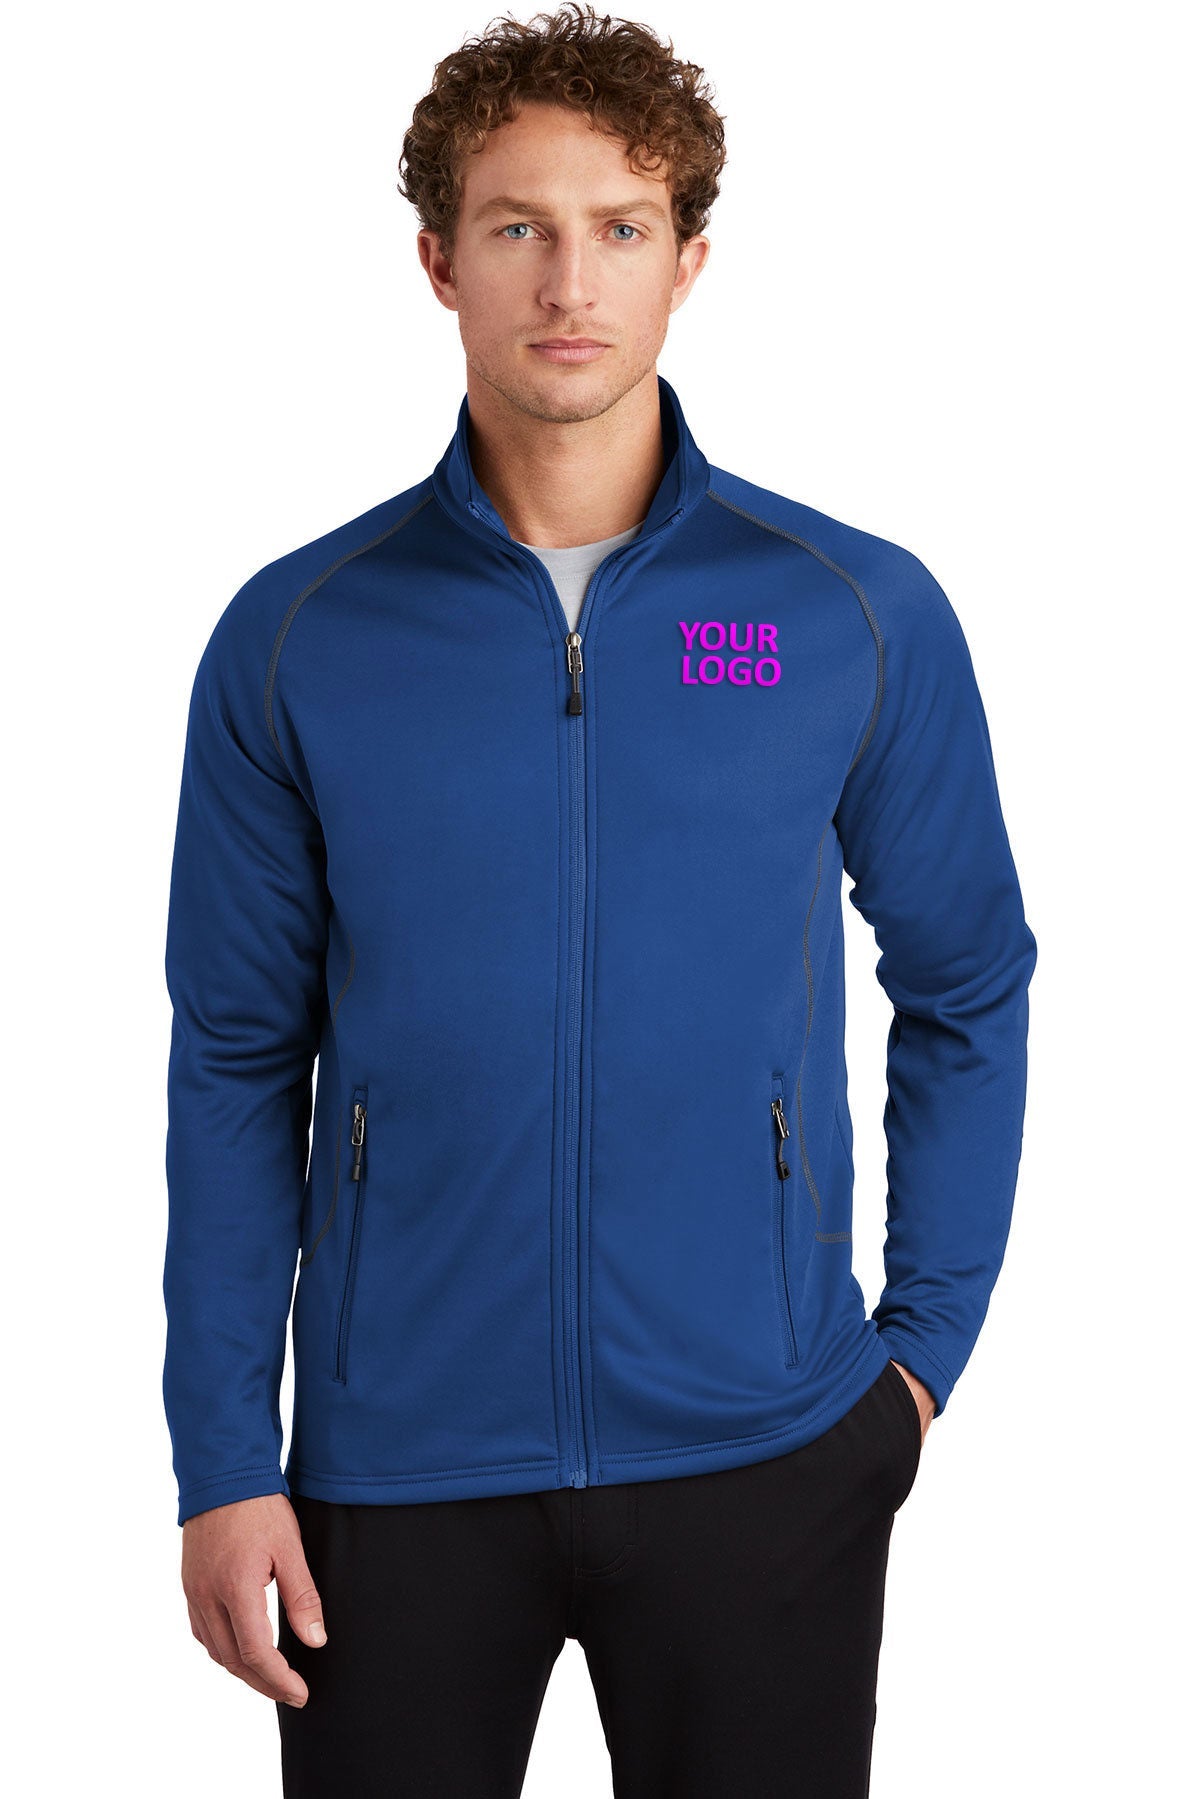 Eddie Bauer Cobalt Blue EB246 custom sweatshirts with logo